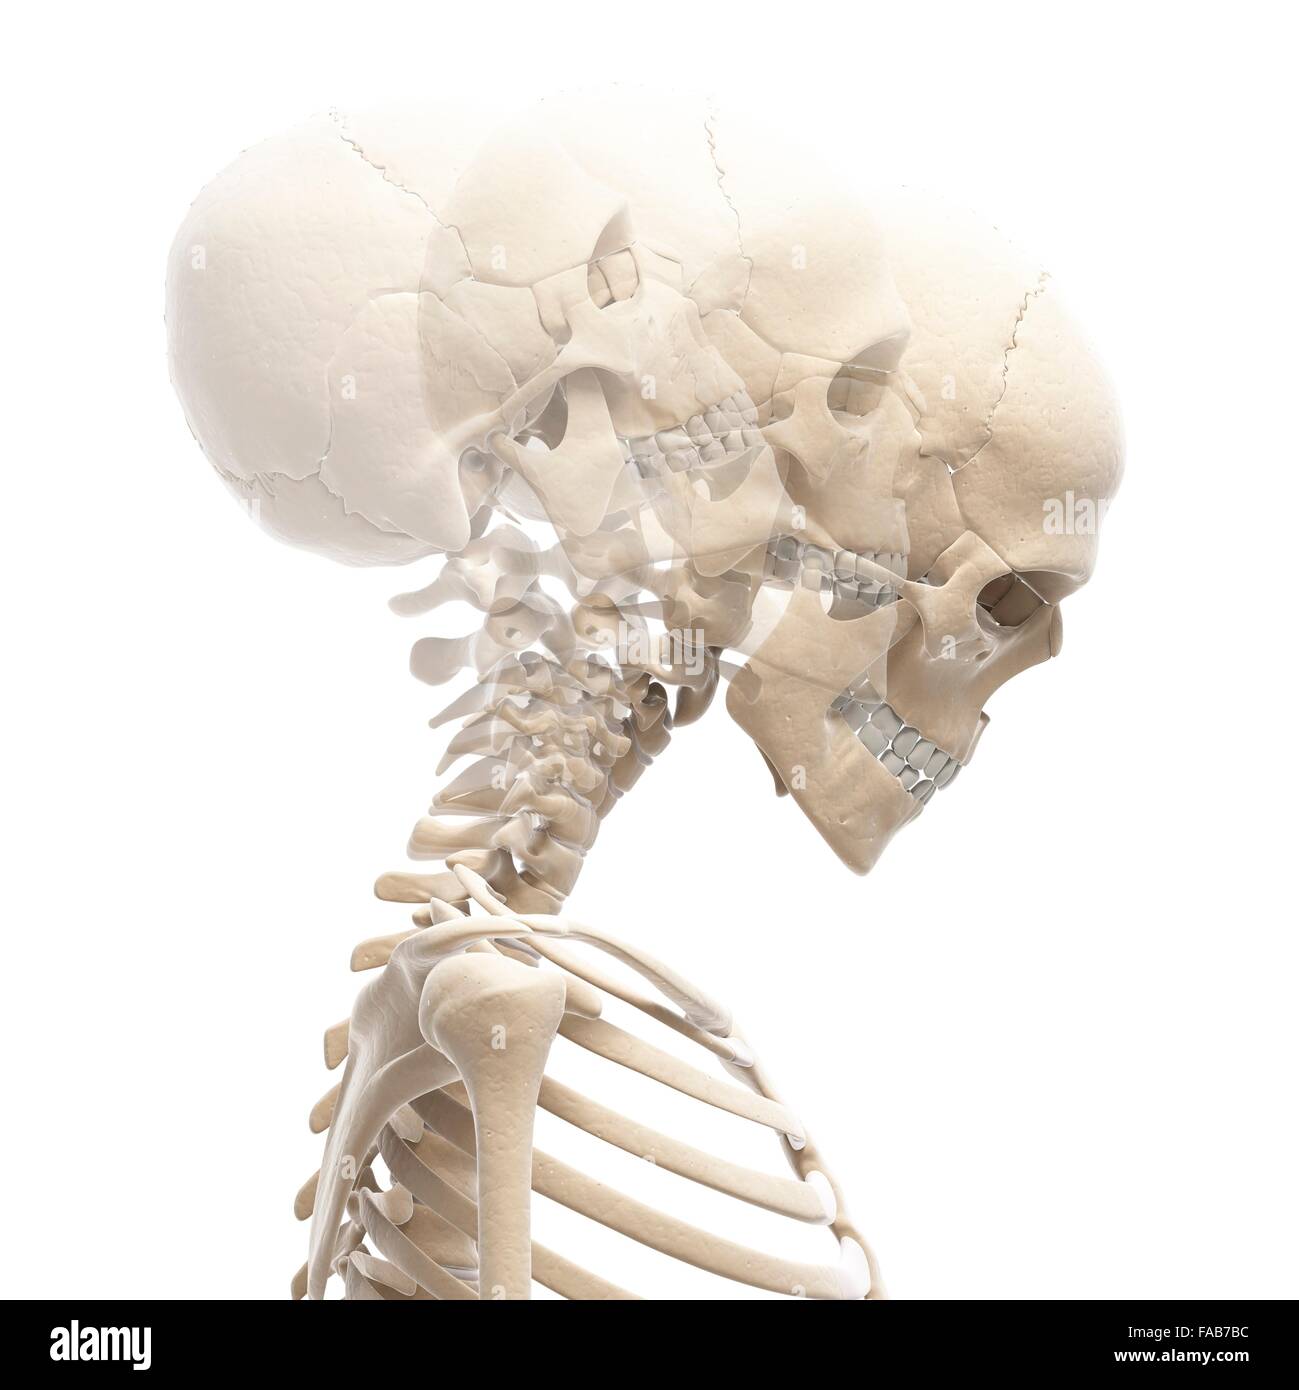 Human neck bending forwards and backwards, computer illustration. Stock Photo